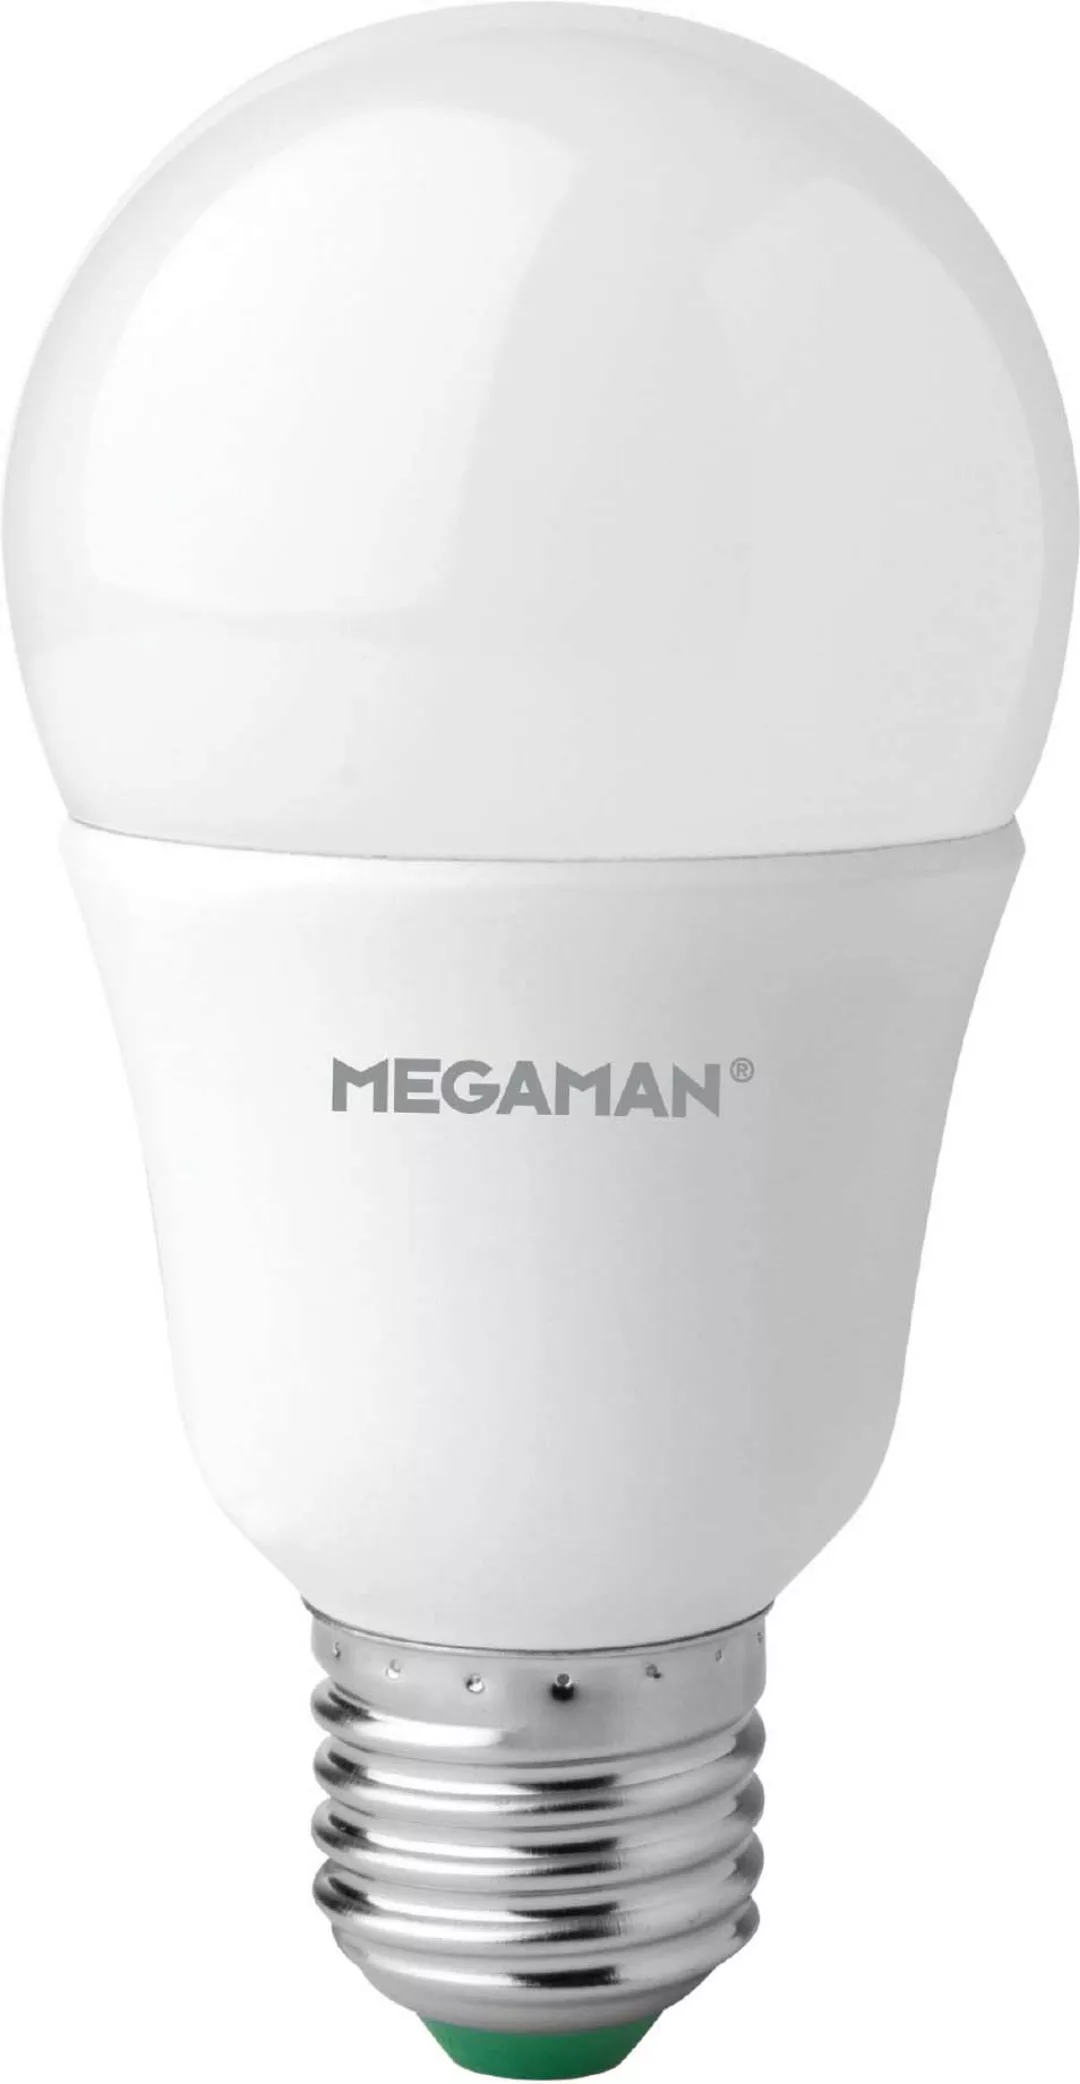 Megaman LED-Classic-Lampe E27/840 A60 MM21087 günstig online kaufen